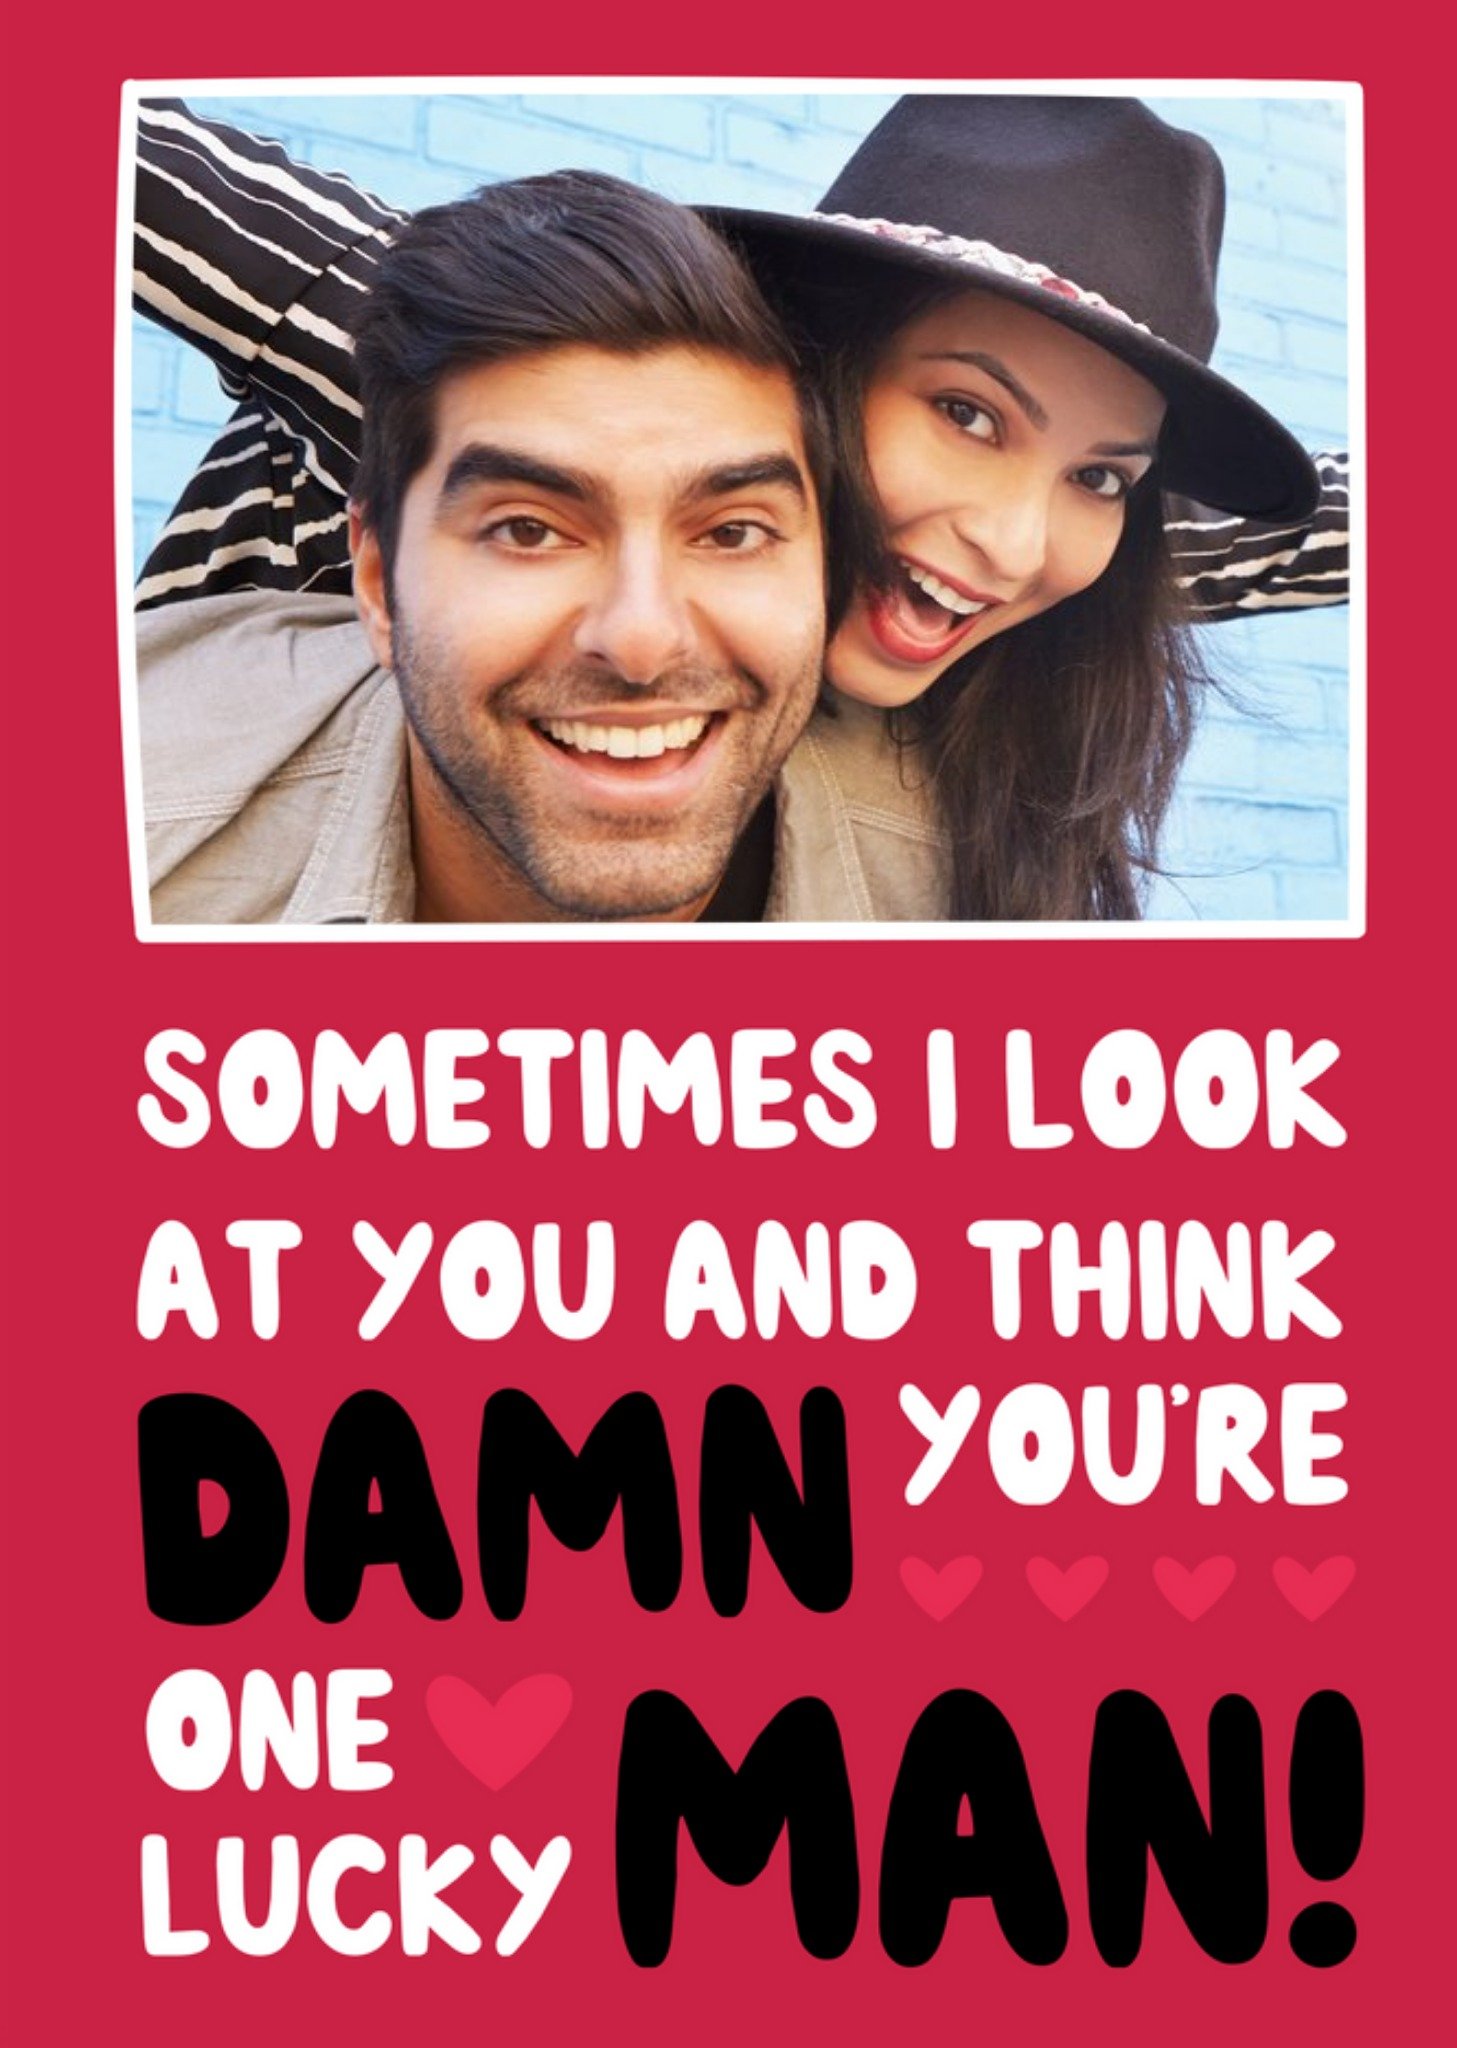 Moonpig Damn You're One Lucky Man Photo Upload Valentine's Card Ecard